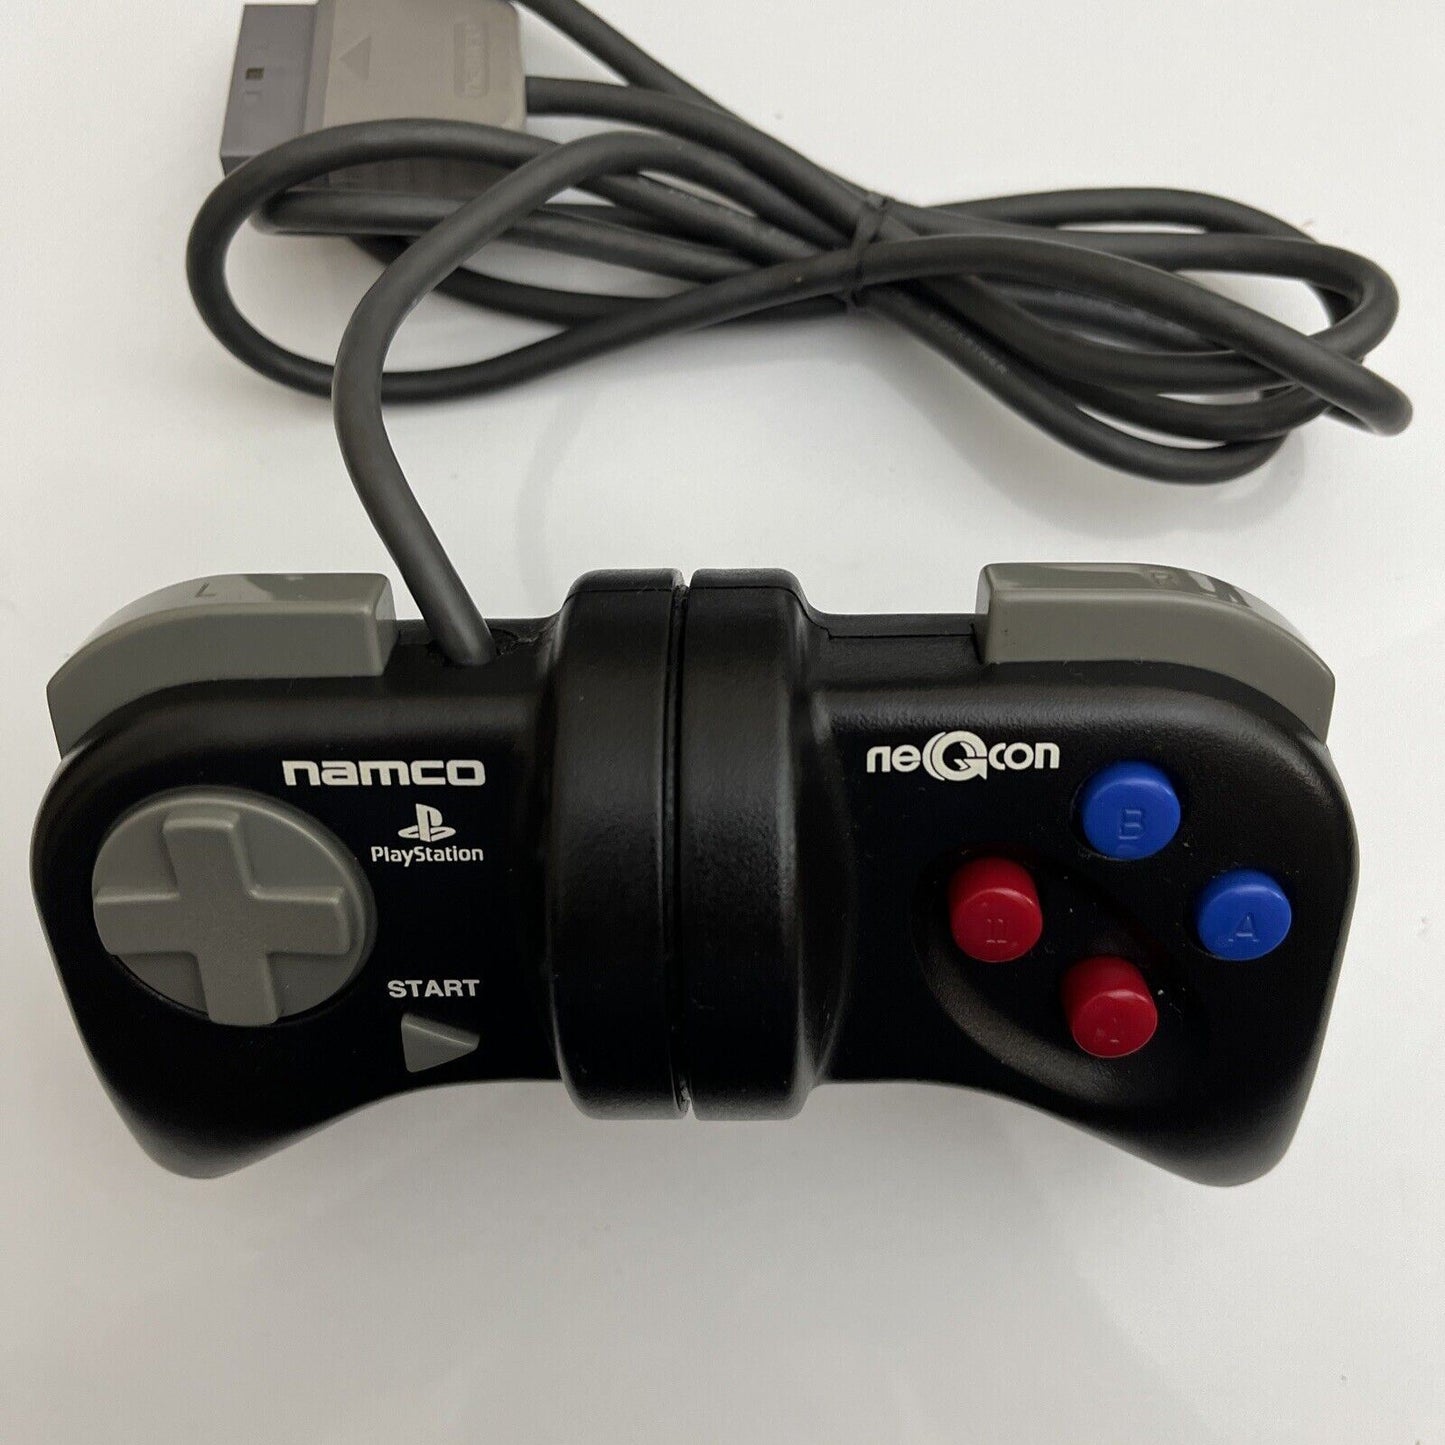 Namco Sony PlayStation Negcon Controller Black NPC-104